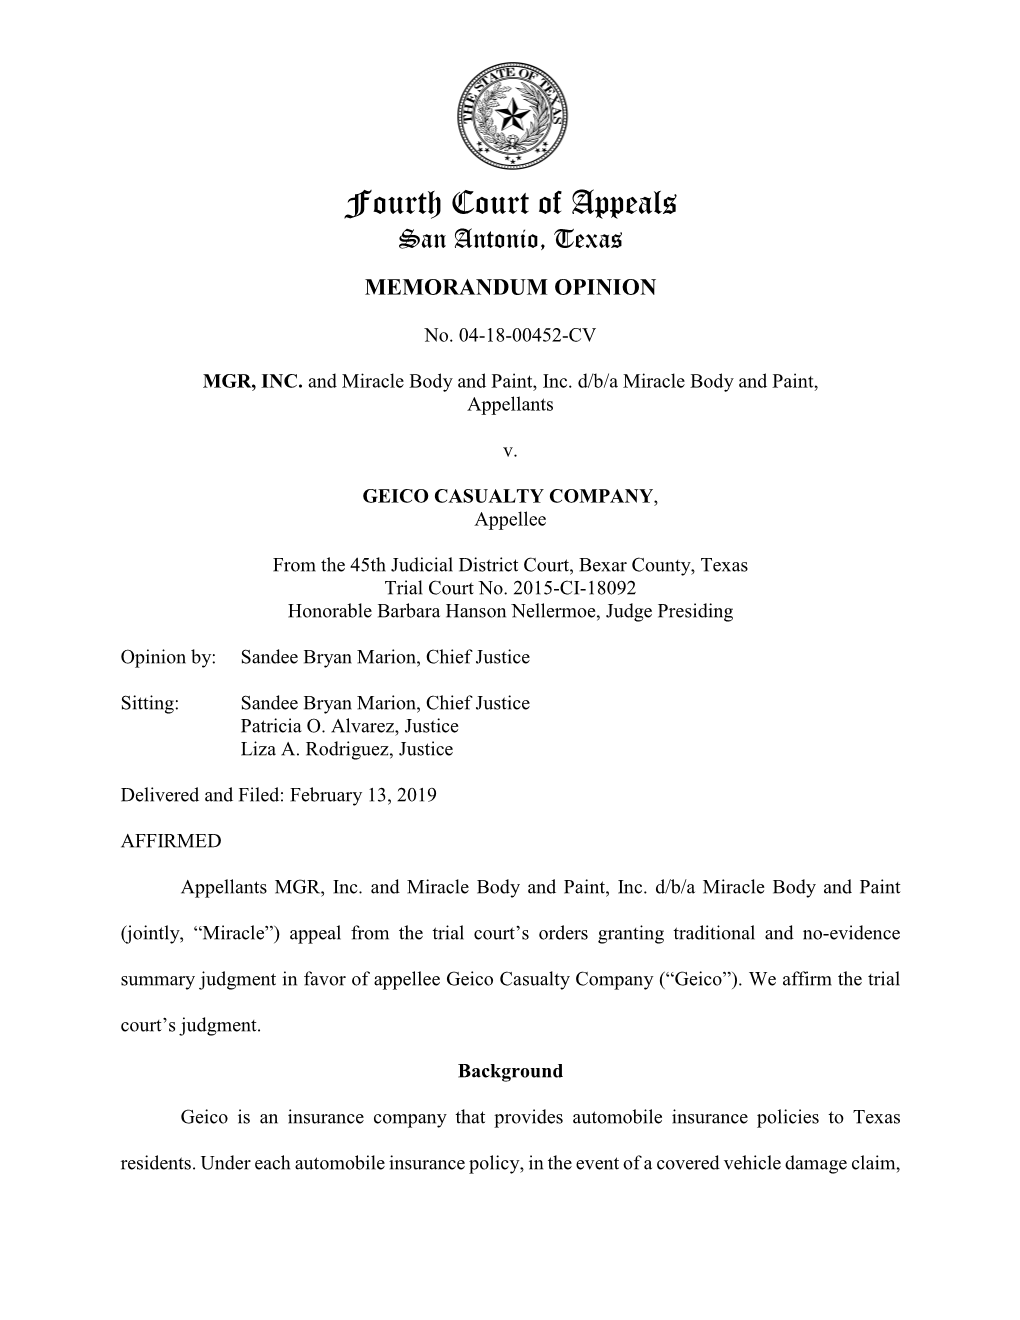 Fourth Court of Appeals San Antonio, Texas